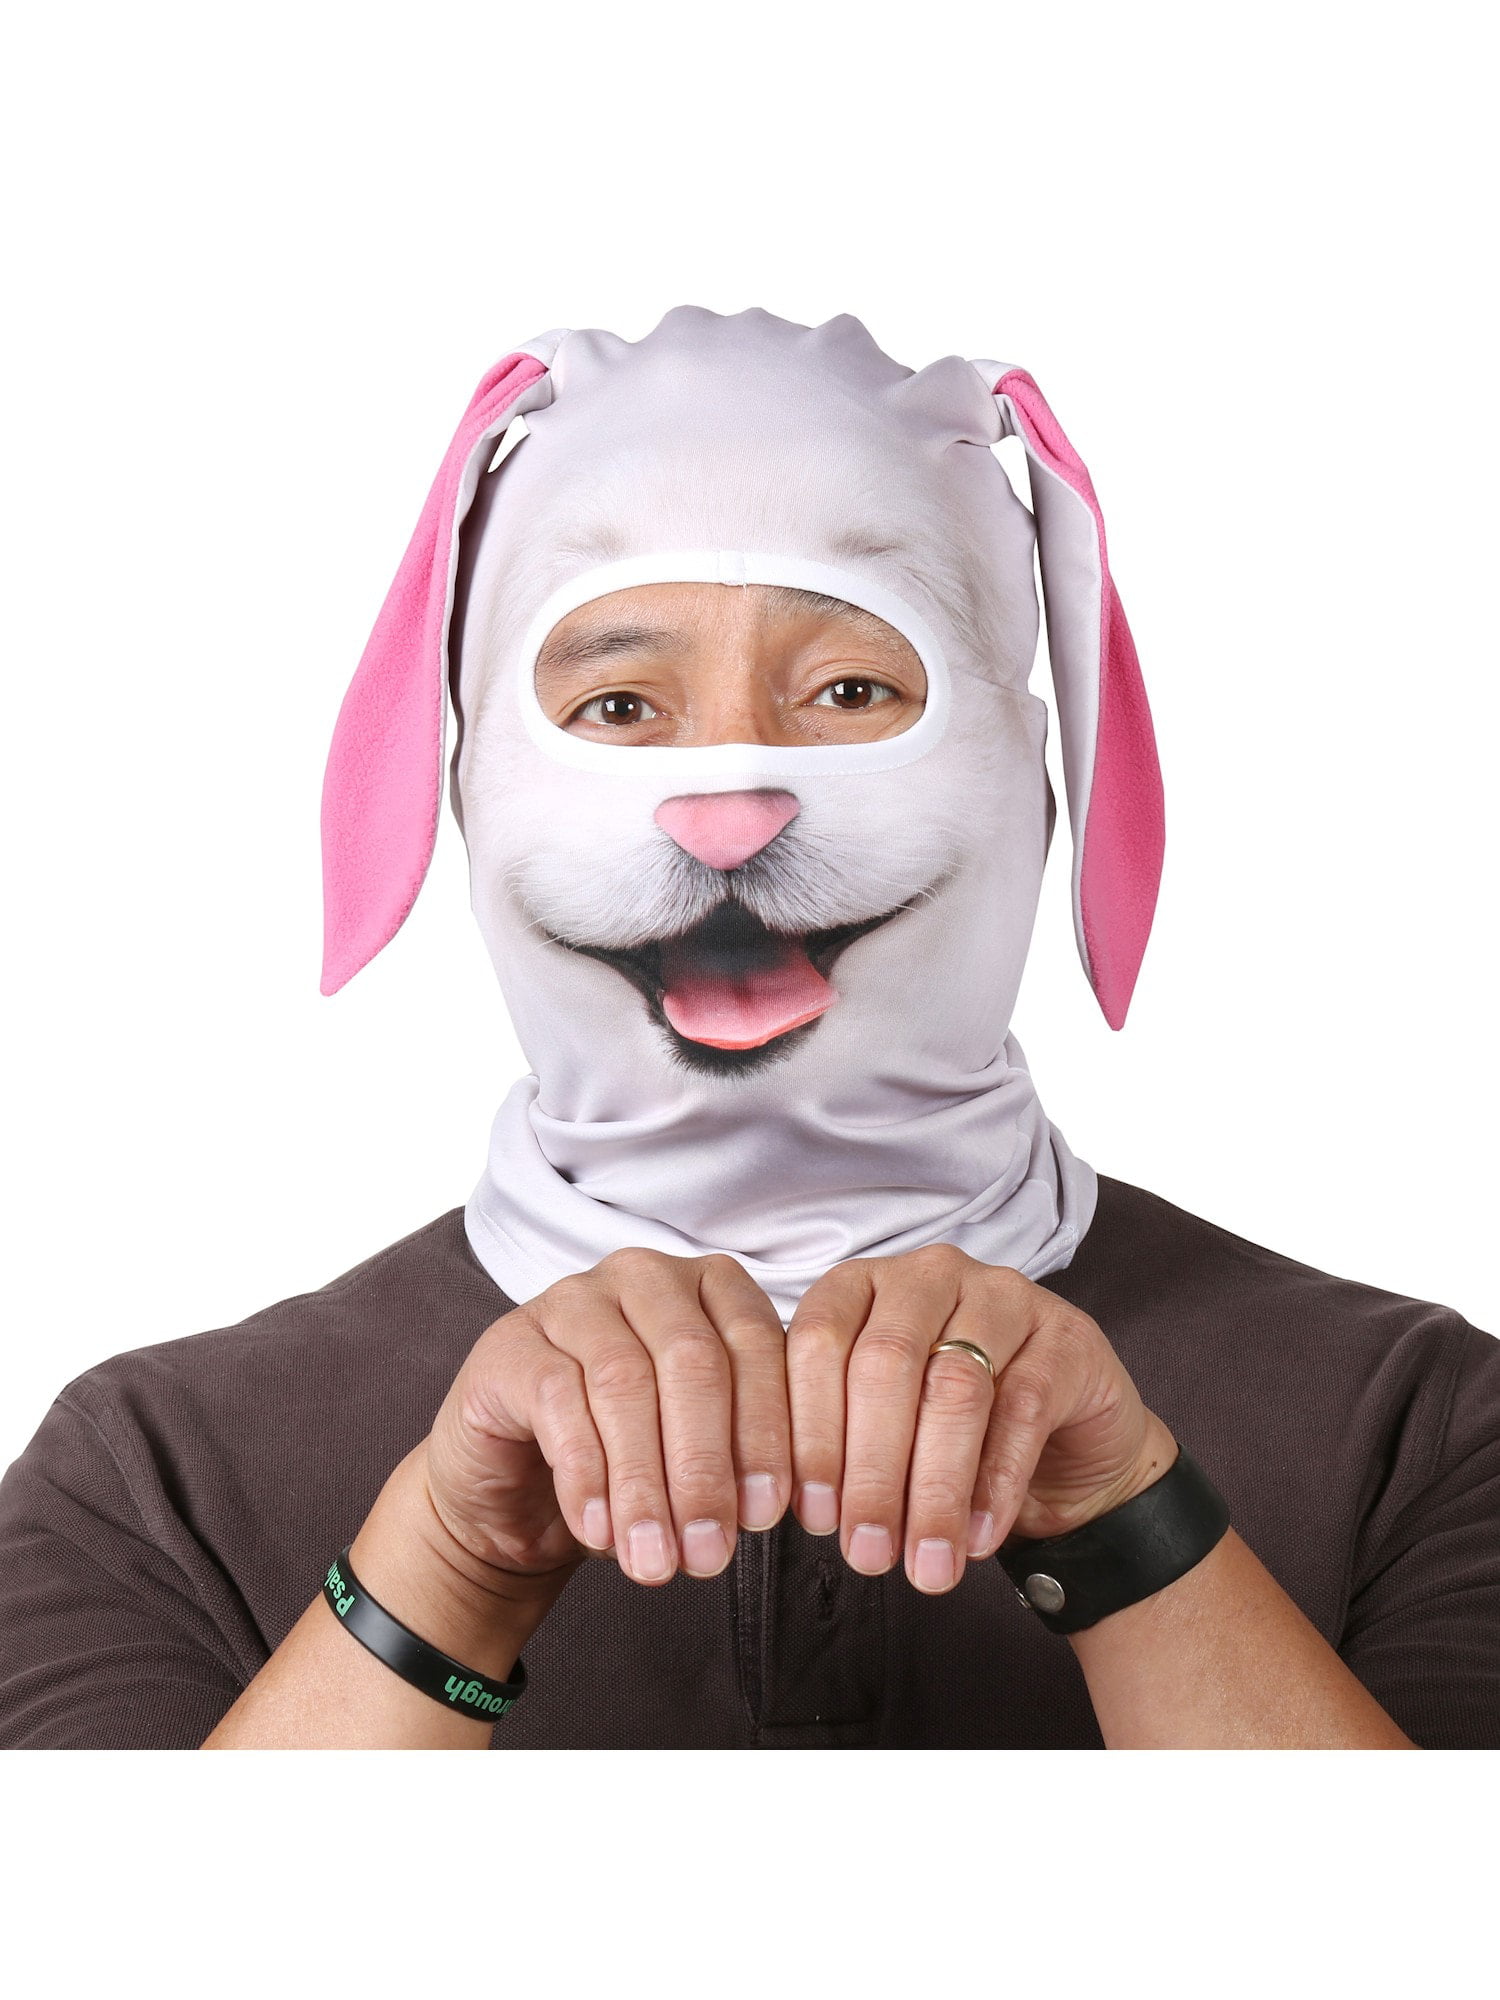 knit ski mask rabbit ears balaclava costume beanie adult teen Tan bunny hat